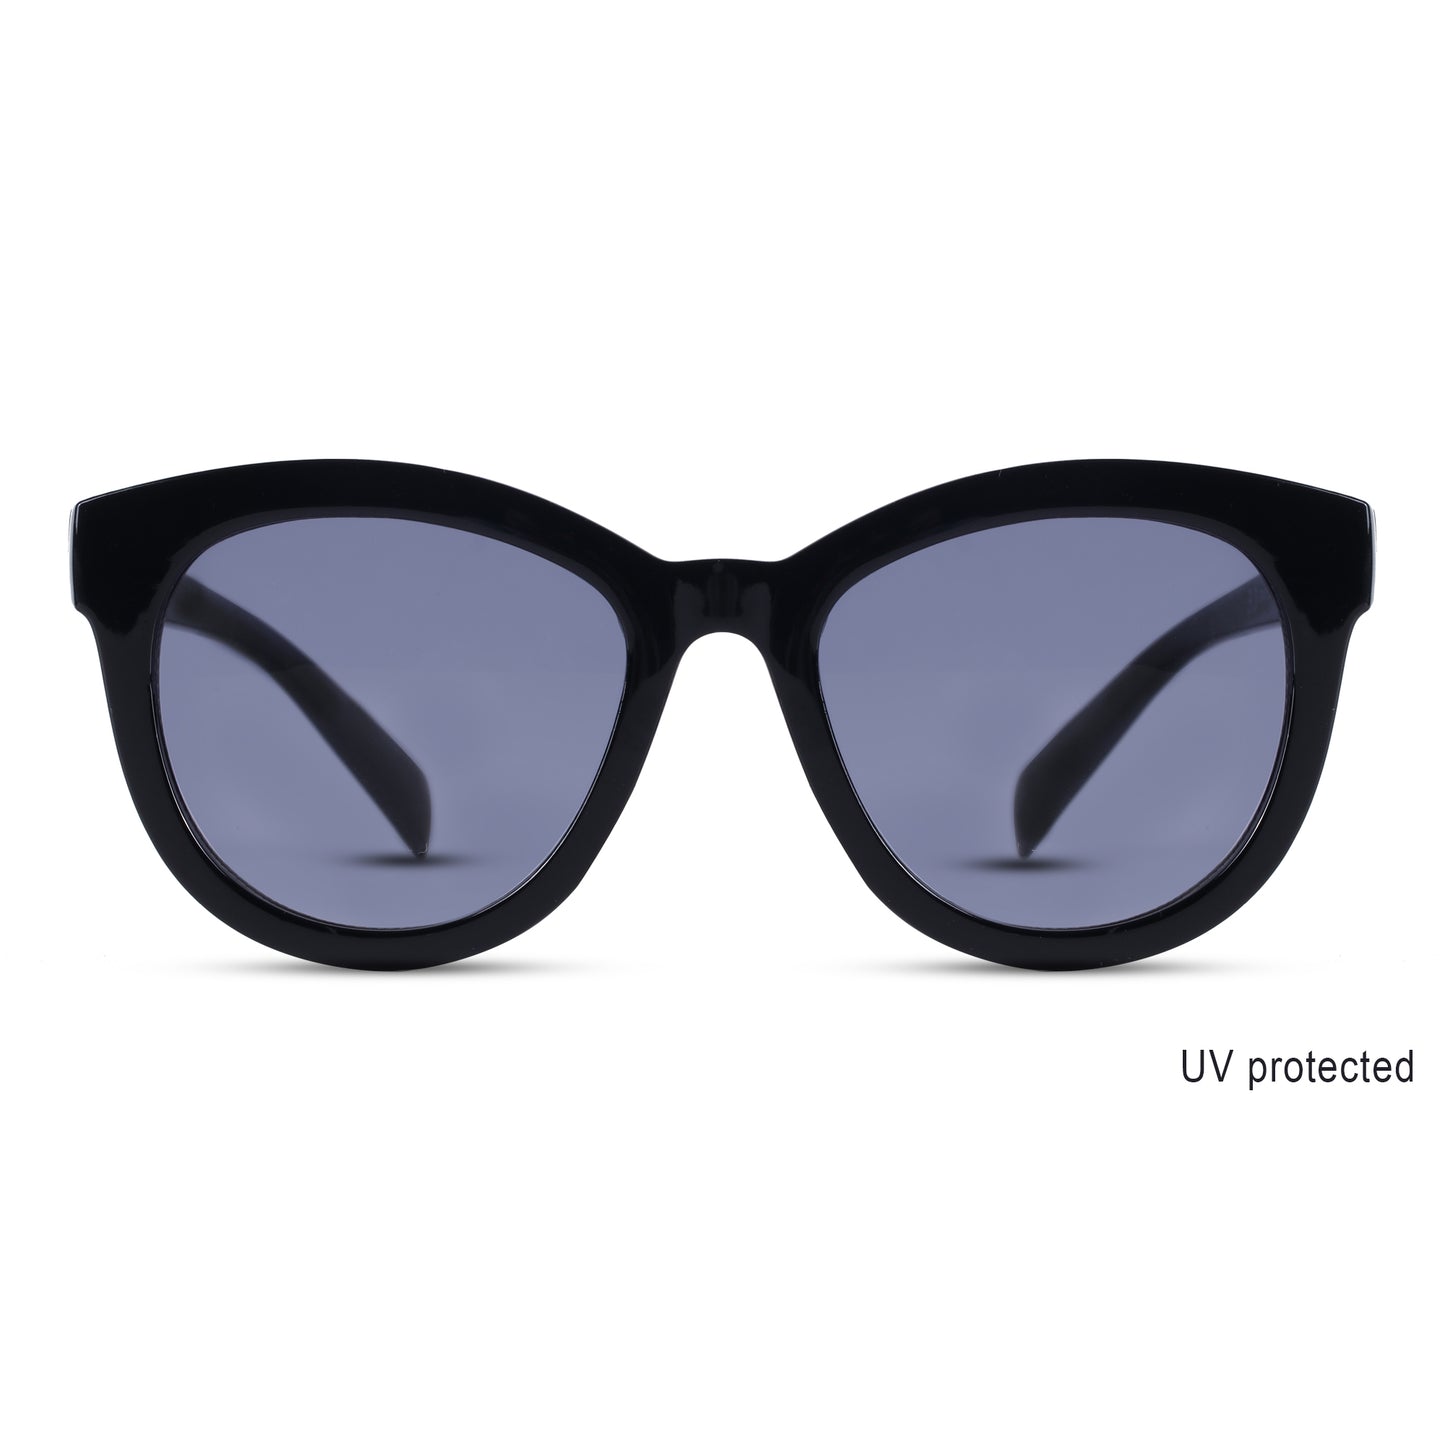 2.5 NVG UV Protected Black Cateye Sunglasses